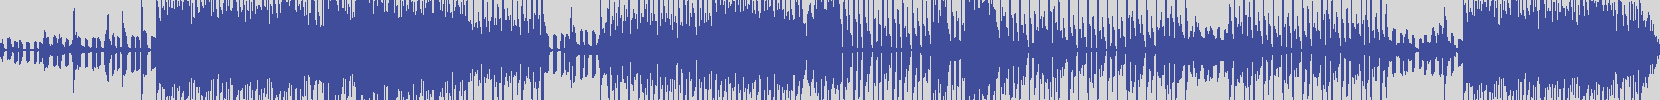 nf_boyz_records [NFY080] Plastic Beats - Moviegroovie [Man Grovia Mix] audio wave form